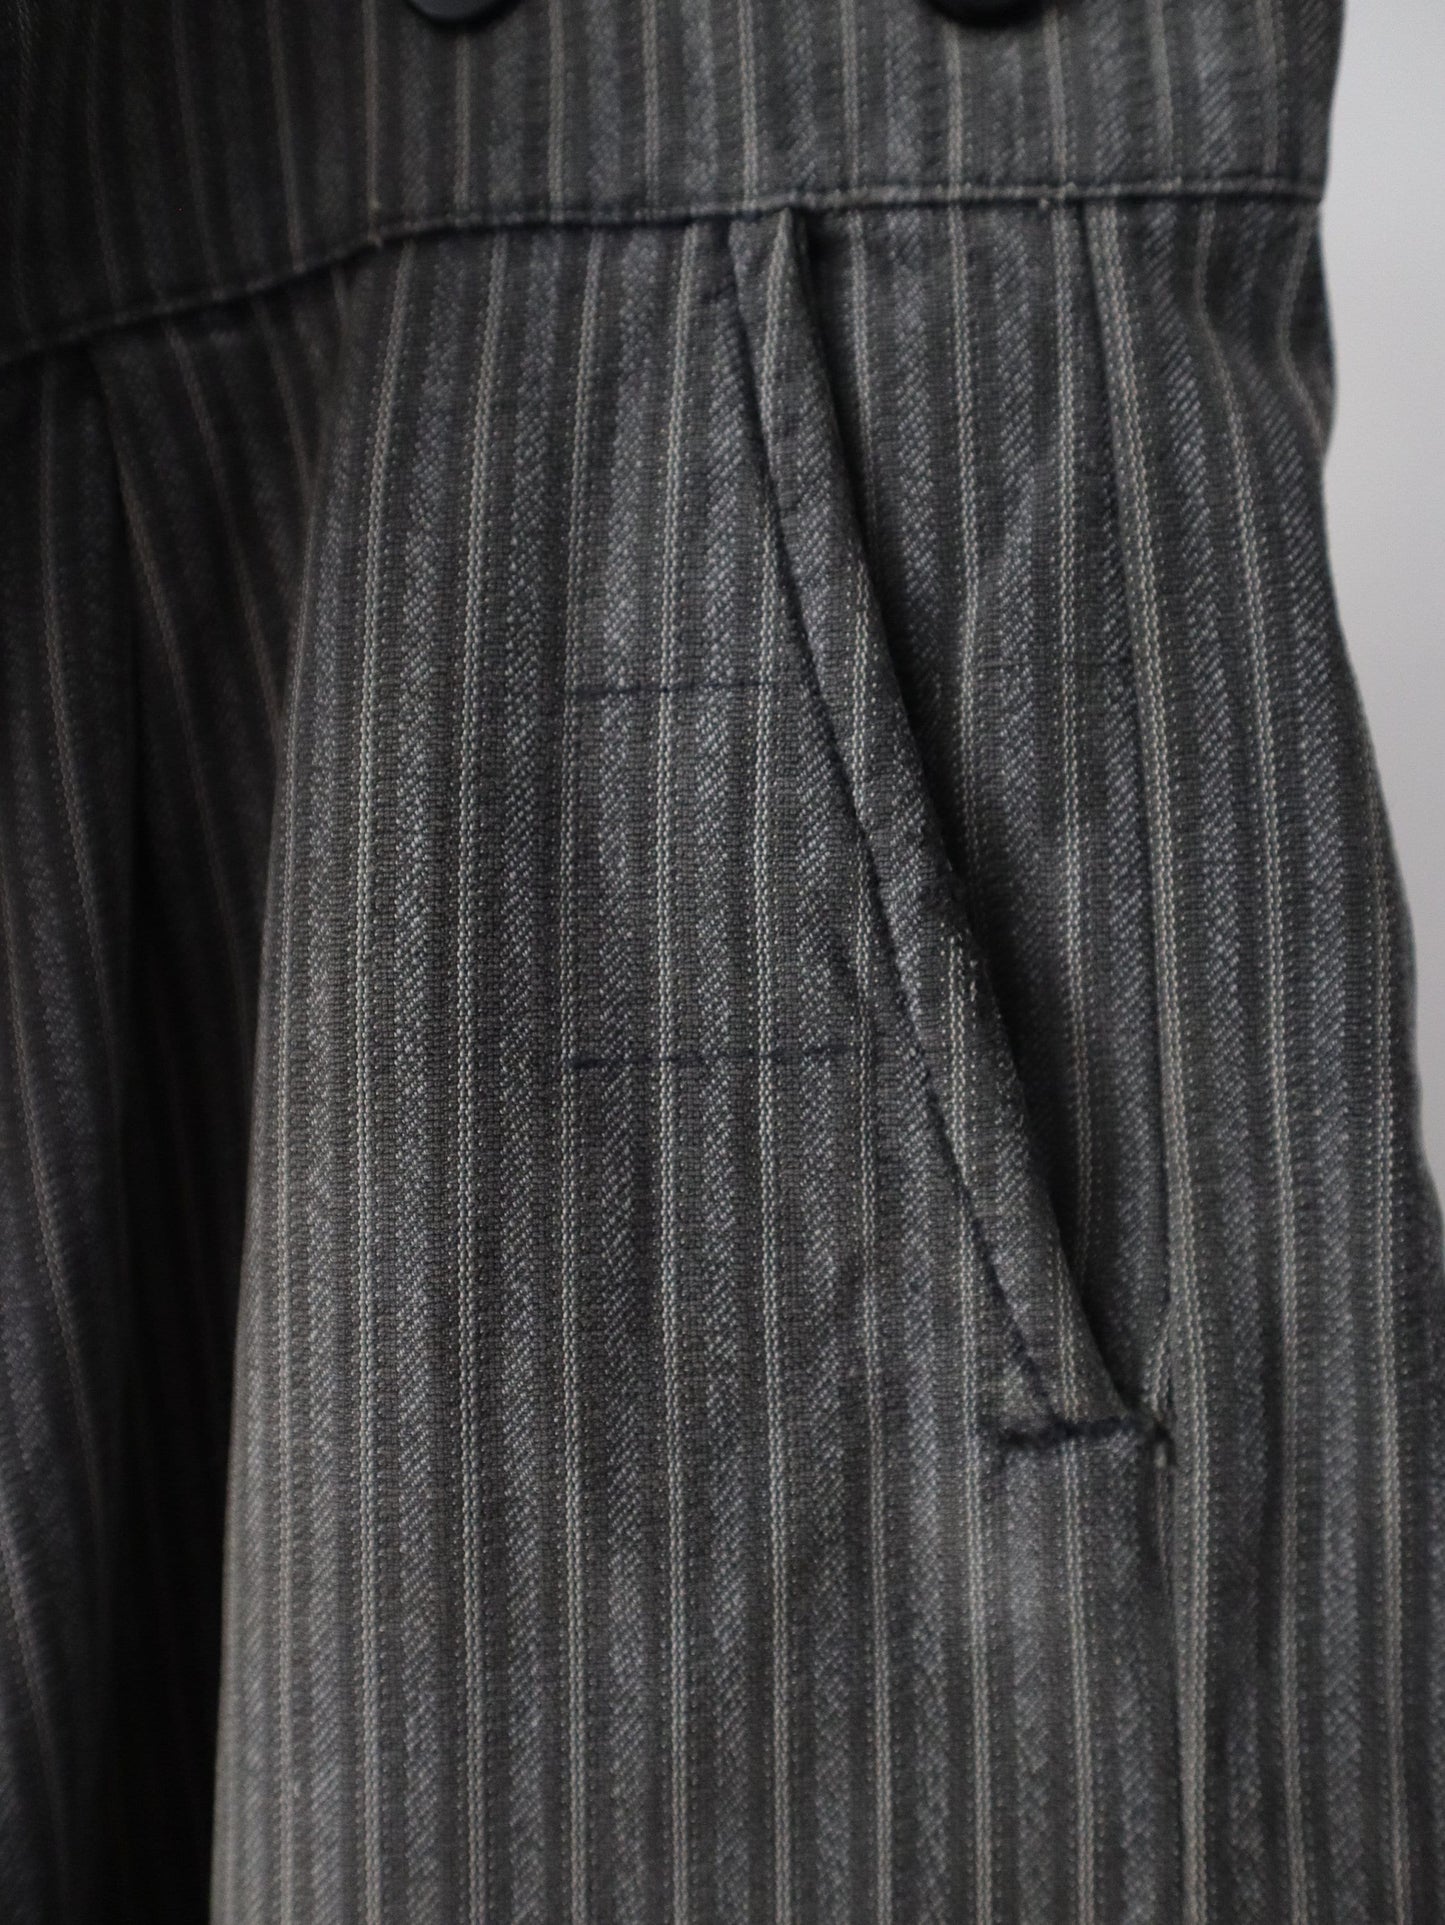 French 1940s Workwear Trousers Grey Stripe Salt Pepper Cotton Chore Pants